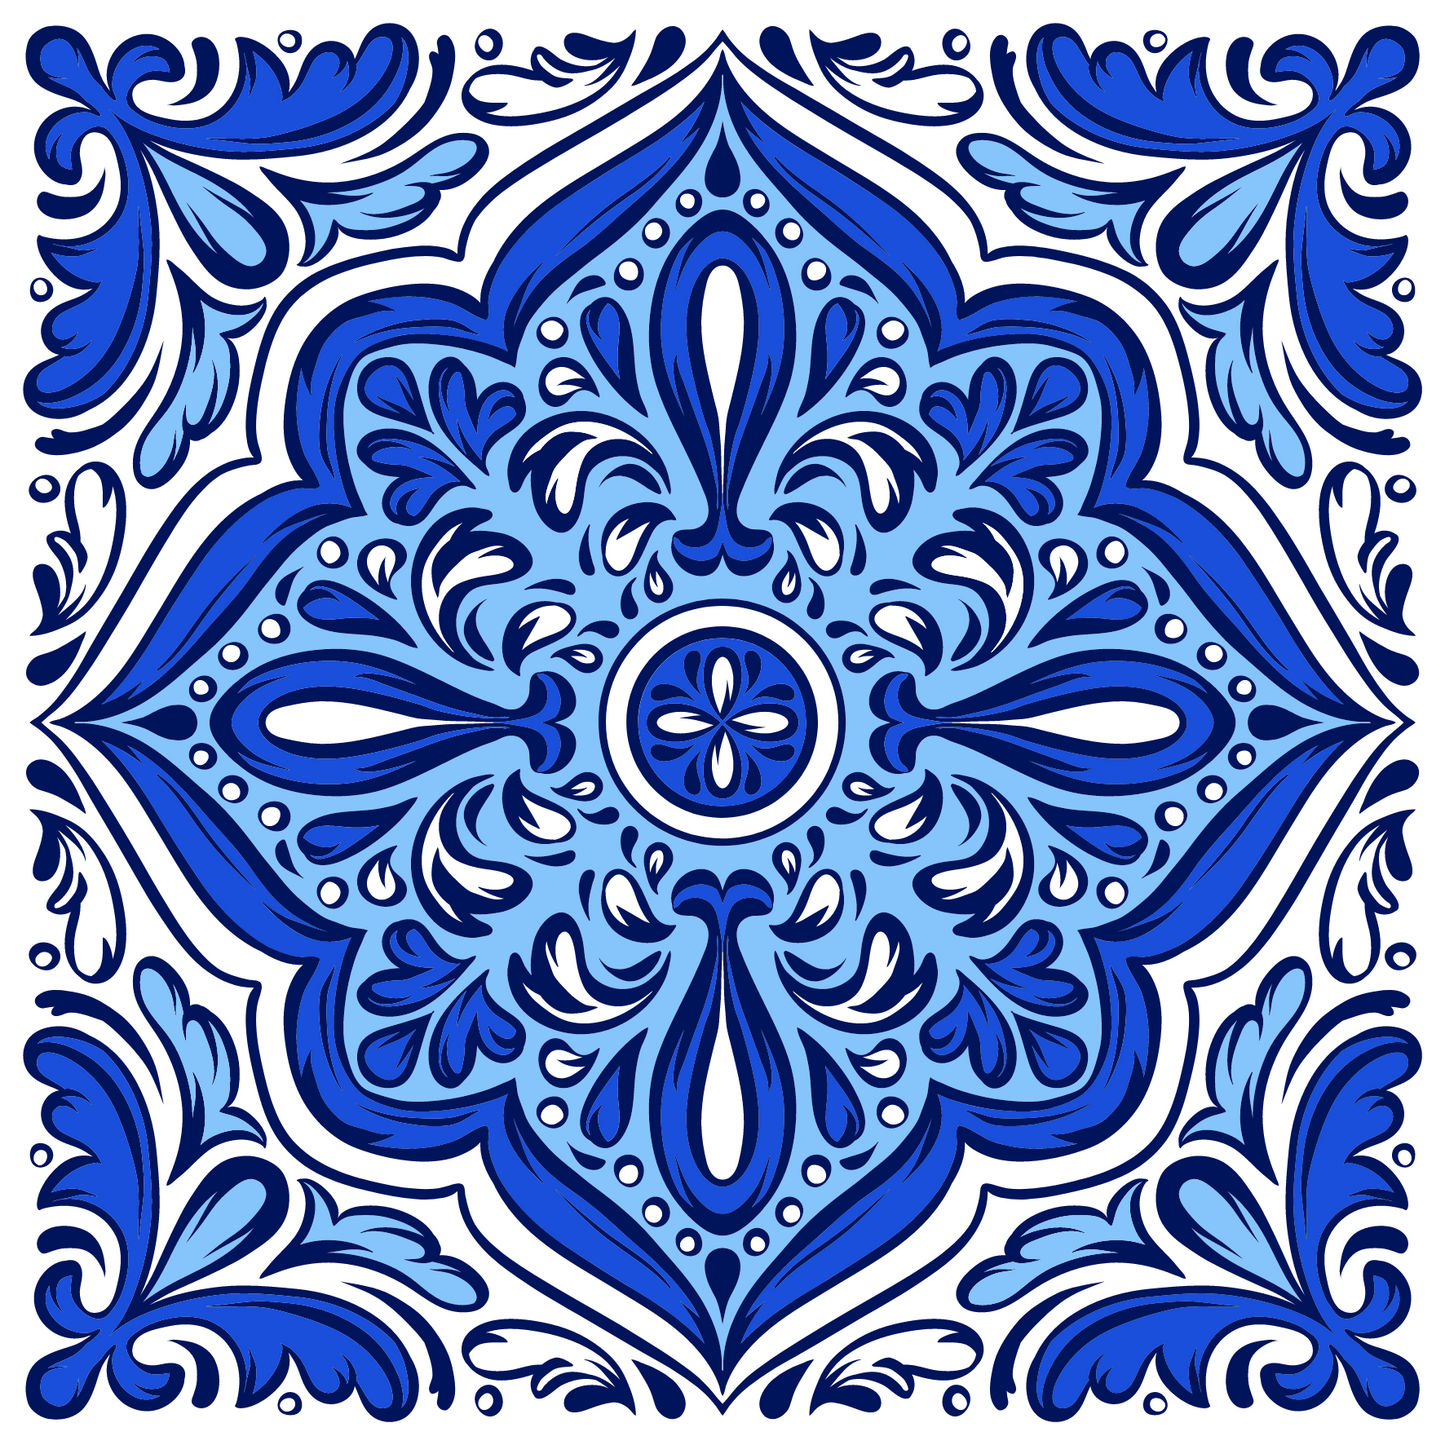 Moroccan Blue Tile Card